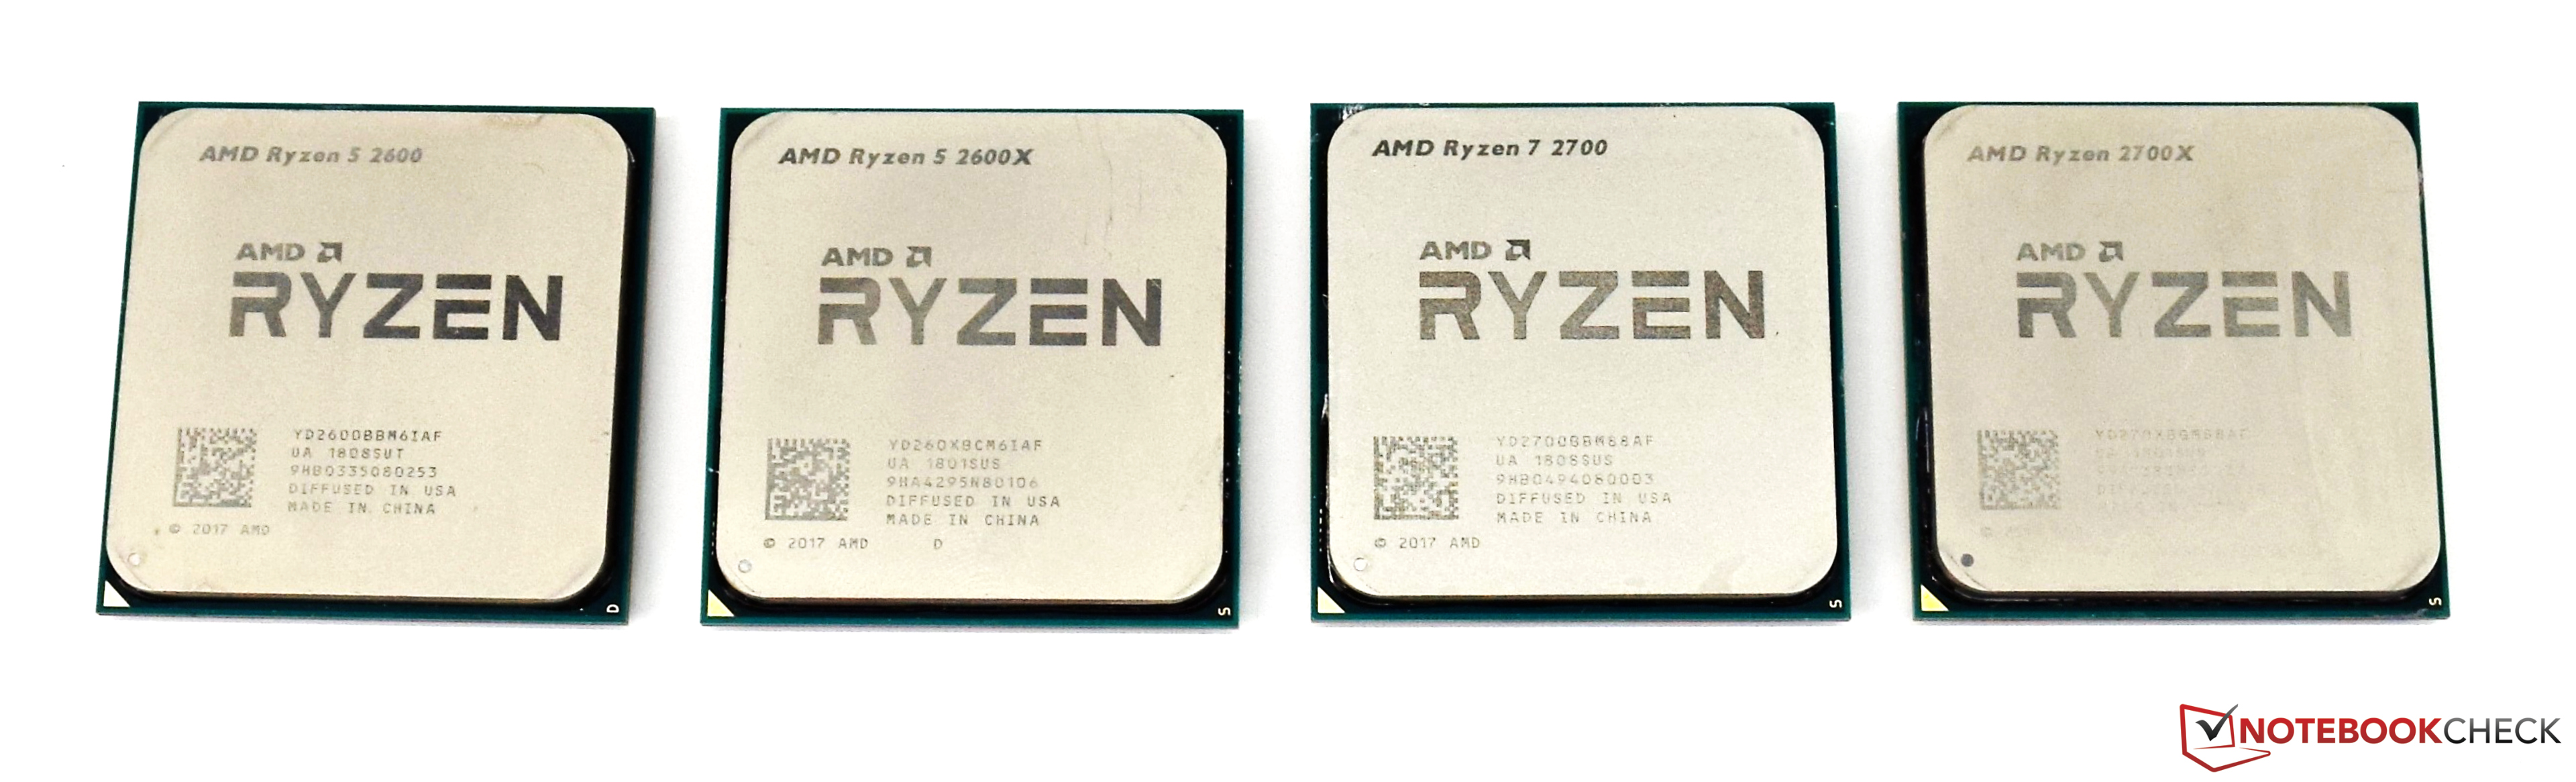 Amd ryzen сколько ядер. AMD Ryzen 5 2600. Процессор АМД райзен 5 5600х. Архитектура Ryzen 5 2600. Hexa Core Ryzen 5 2600.